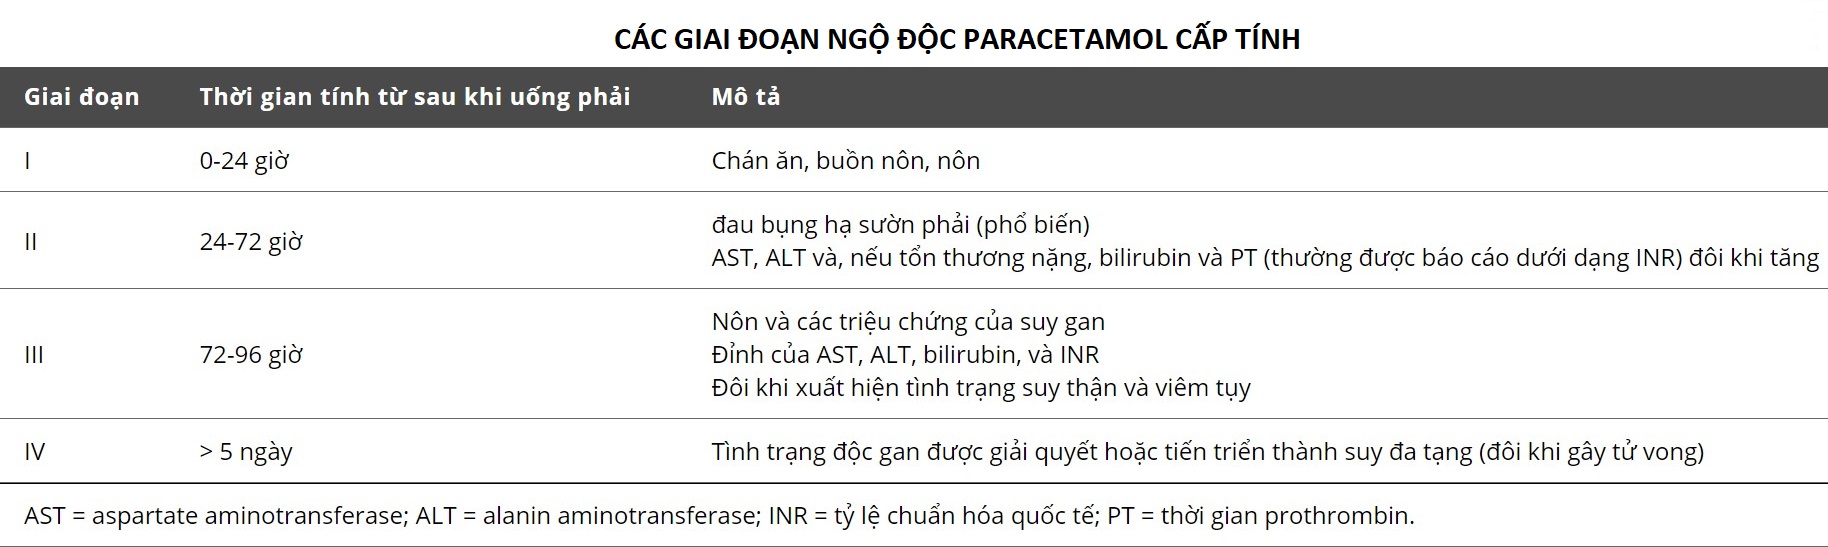 ngoc-doc-paracetamol-cap-tinh-12